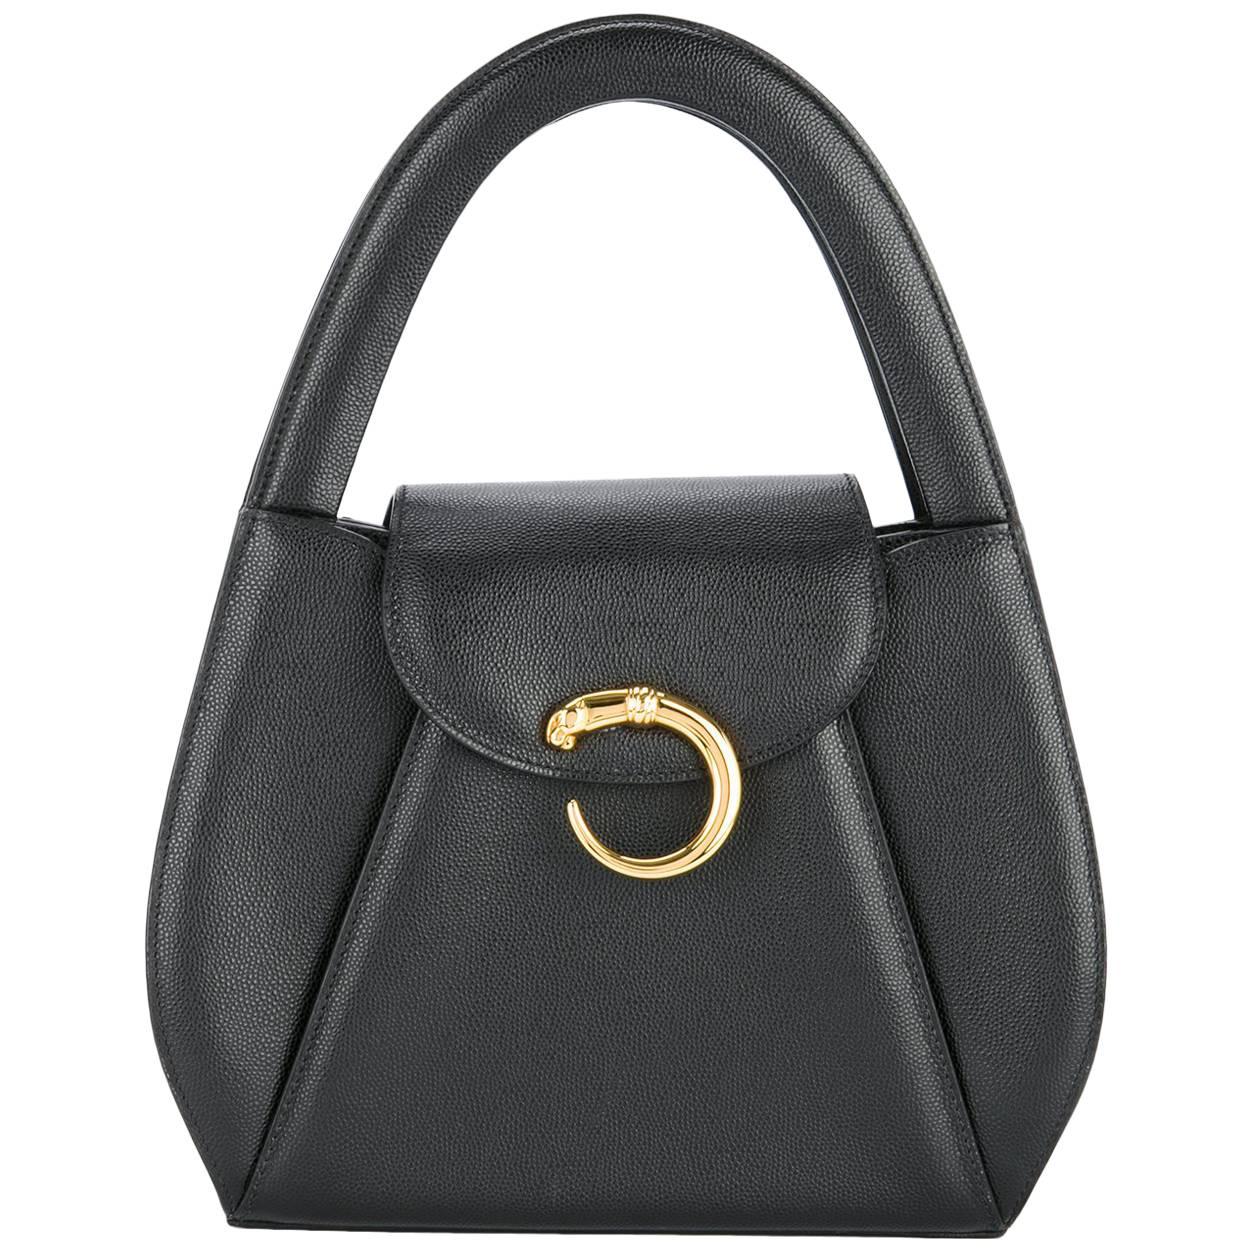 Cartier Black Leather Gold Emblem Top Handle Kelly Style Satchel Evening Bag